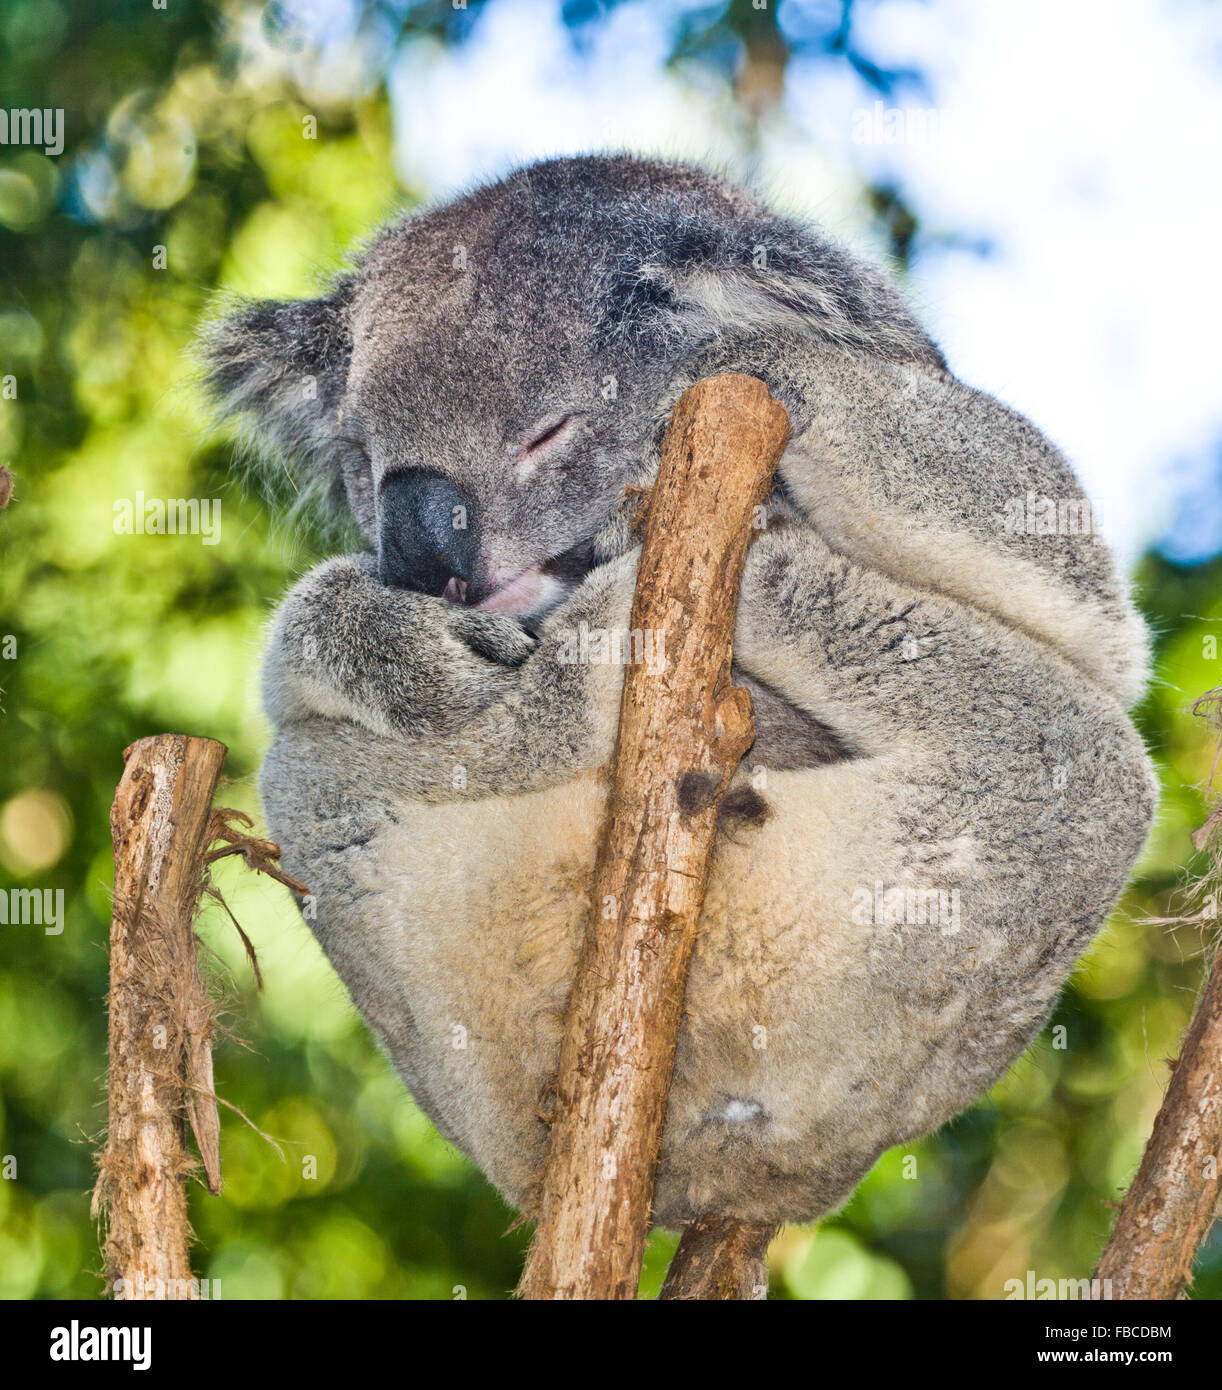 Australien, dösen Koala, Phascolarctos Cenereus, gutgewachsene arboreal Beuteltiere Pflanzenfresser in Australien heimisch Stockfoto